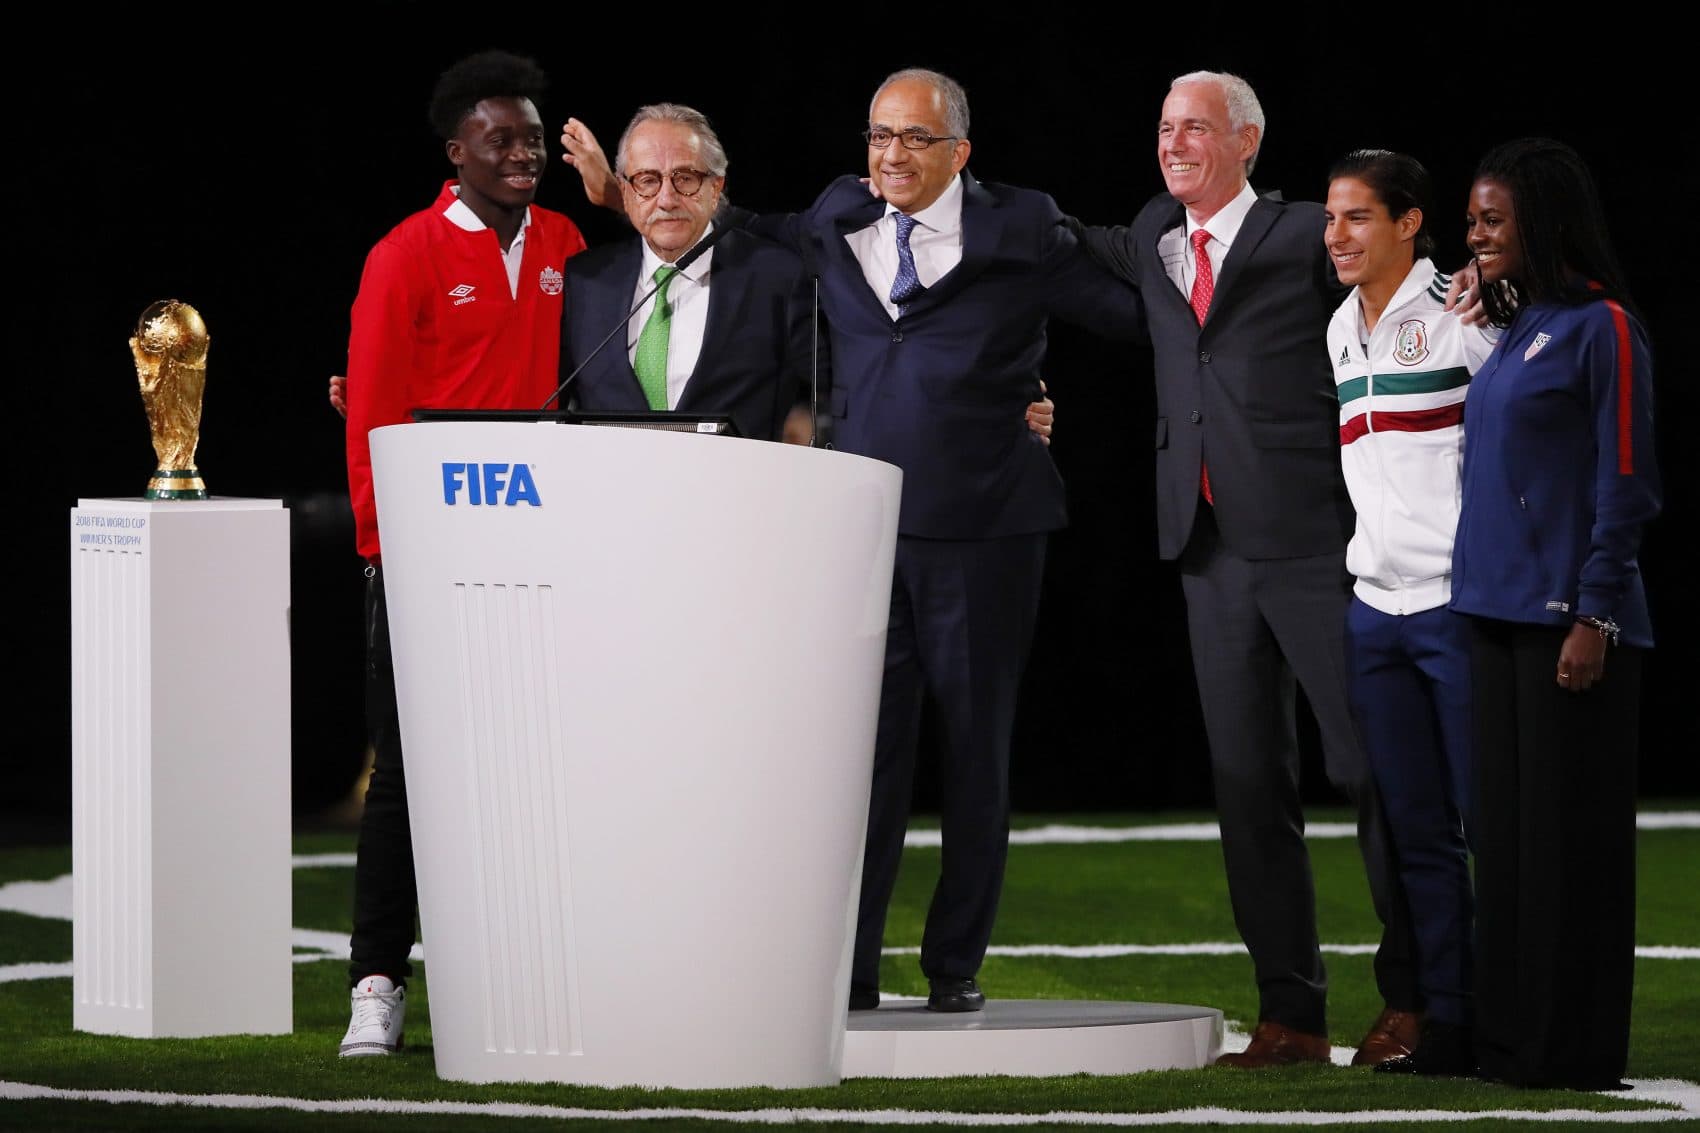 World Cup 2026. FIFA World Cup 2026 USA Mexico Canada host. United 2026. Morocco 2026 FIFA World Cup bid.